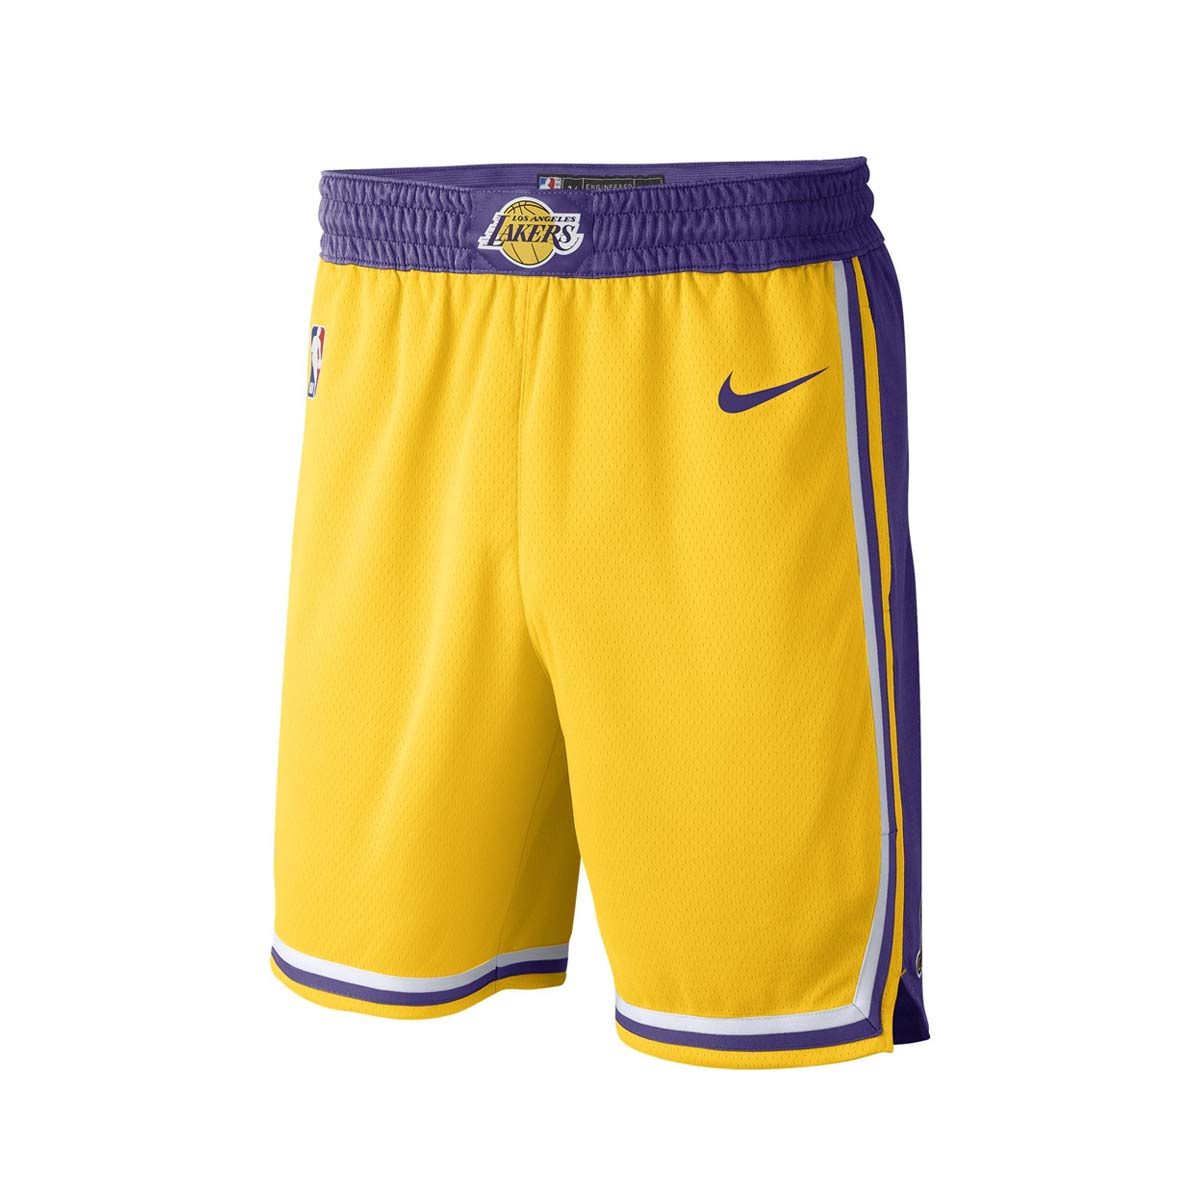 NBA Icon Lakers Swingman Shorts